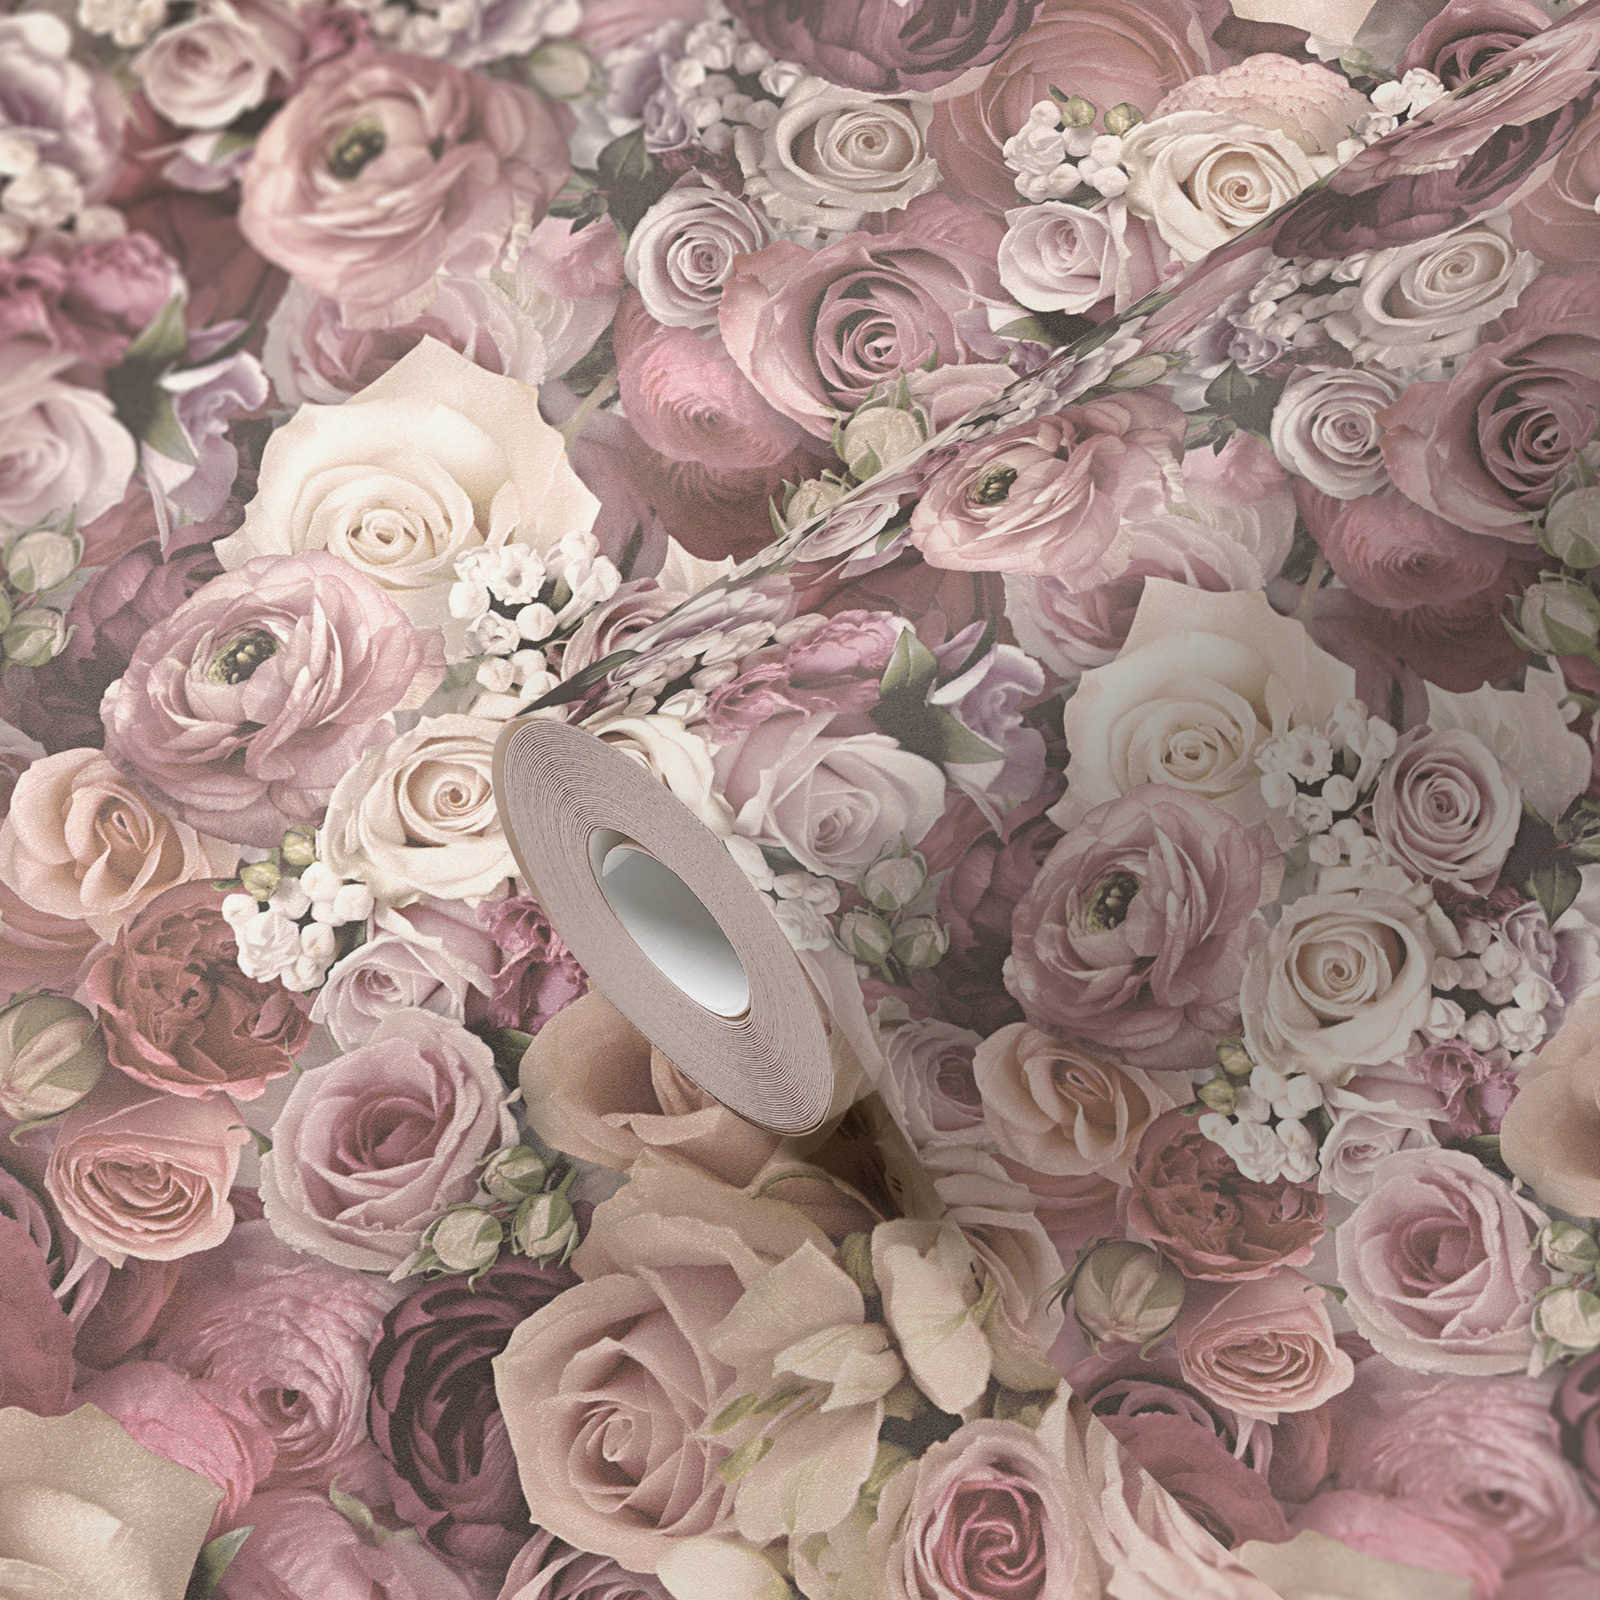             Tapete Rosen in zartem Rosa Blütenmeer – Creme
        